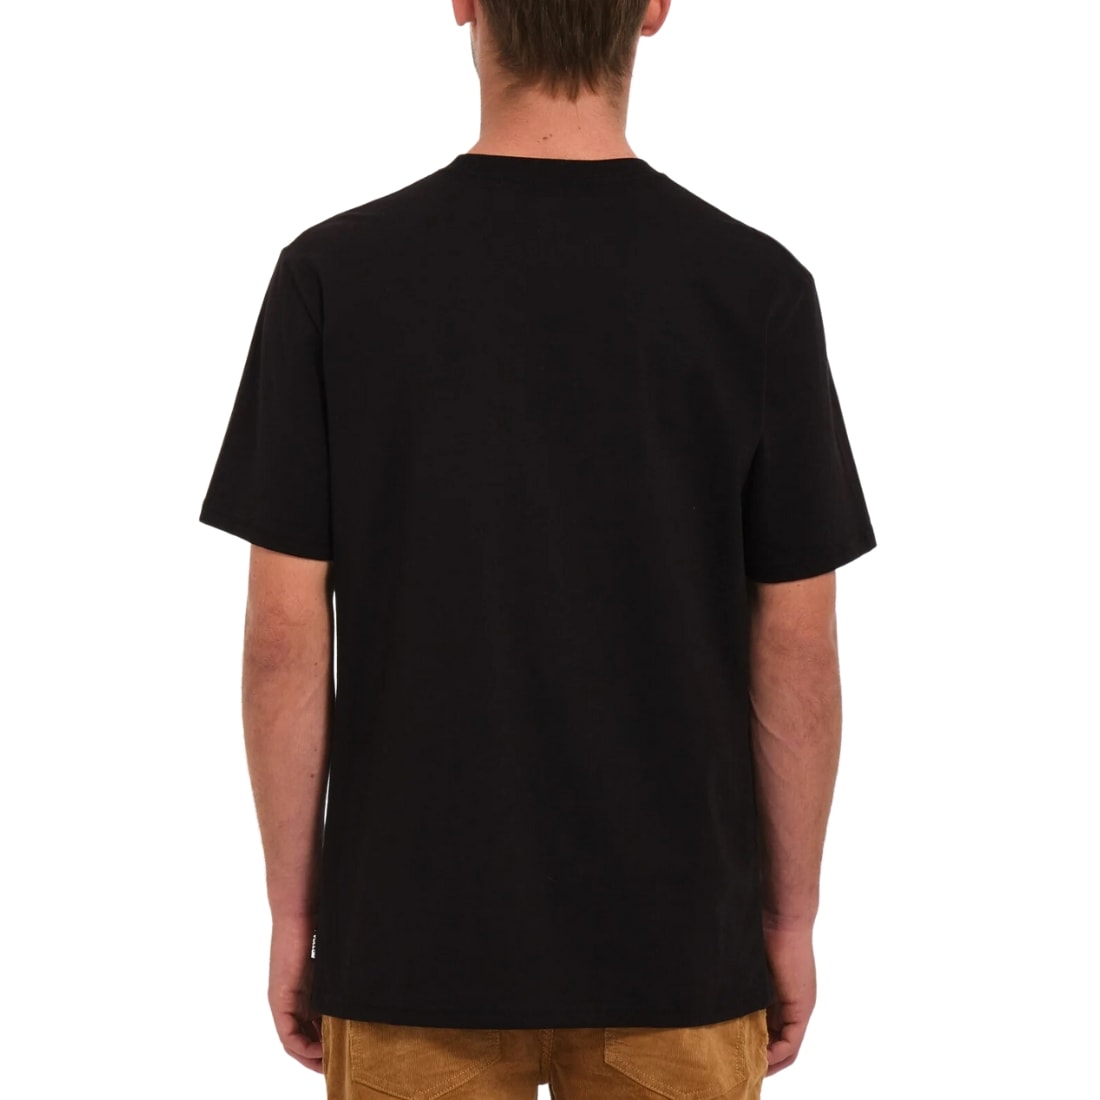 Volcom Max Sherman 2 T-Shirt - Black - Mens Surf Brand T-Shirt by Volcom